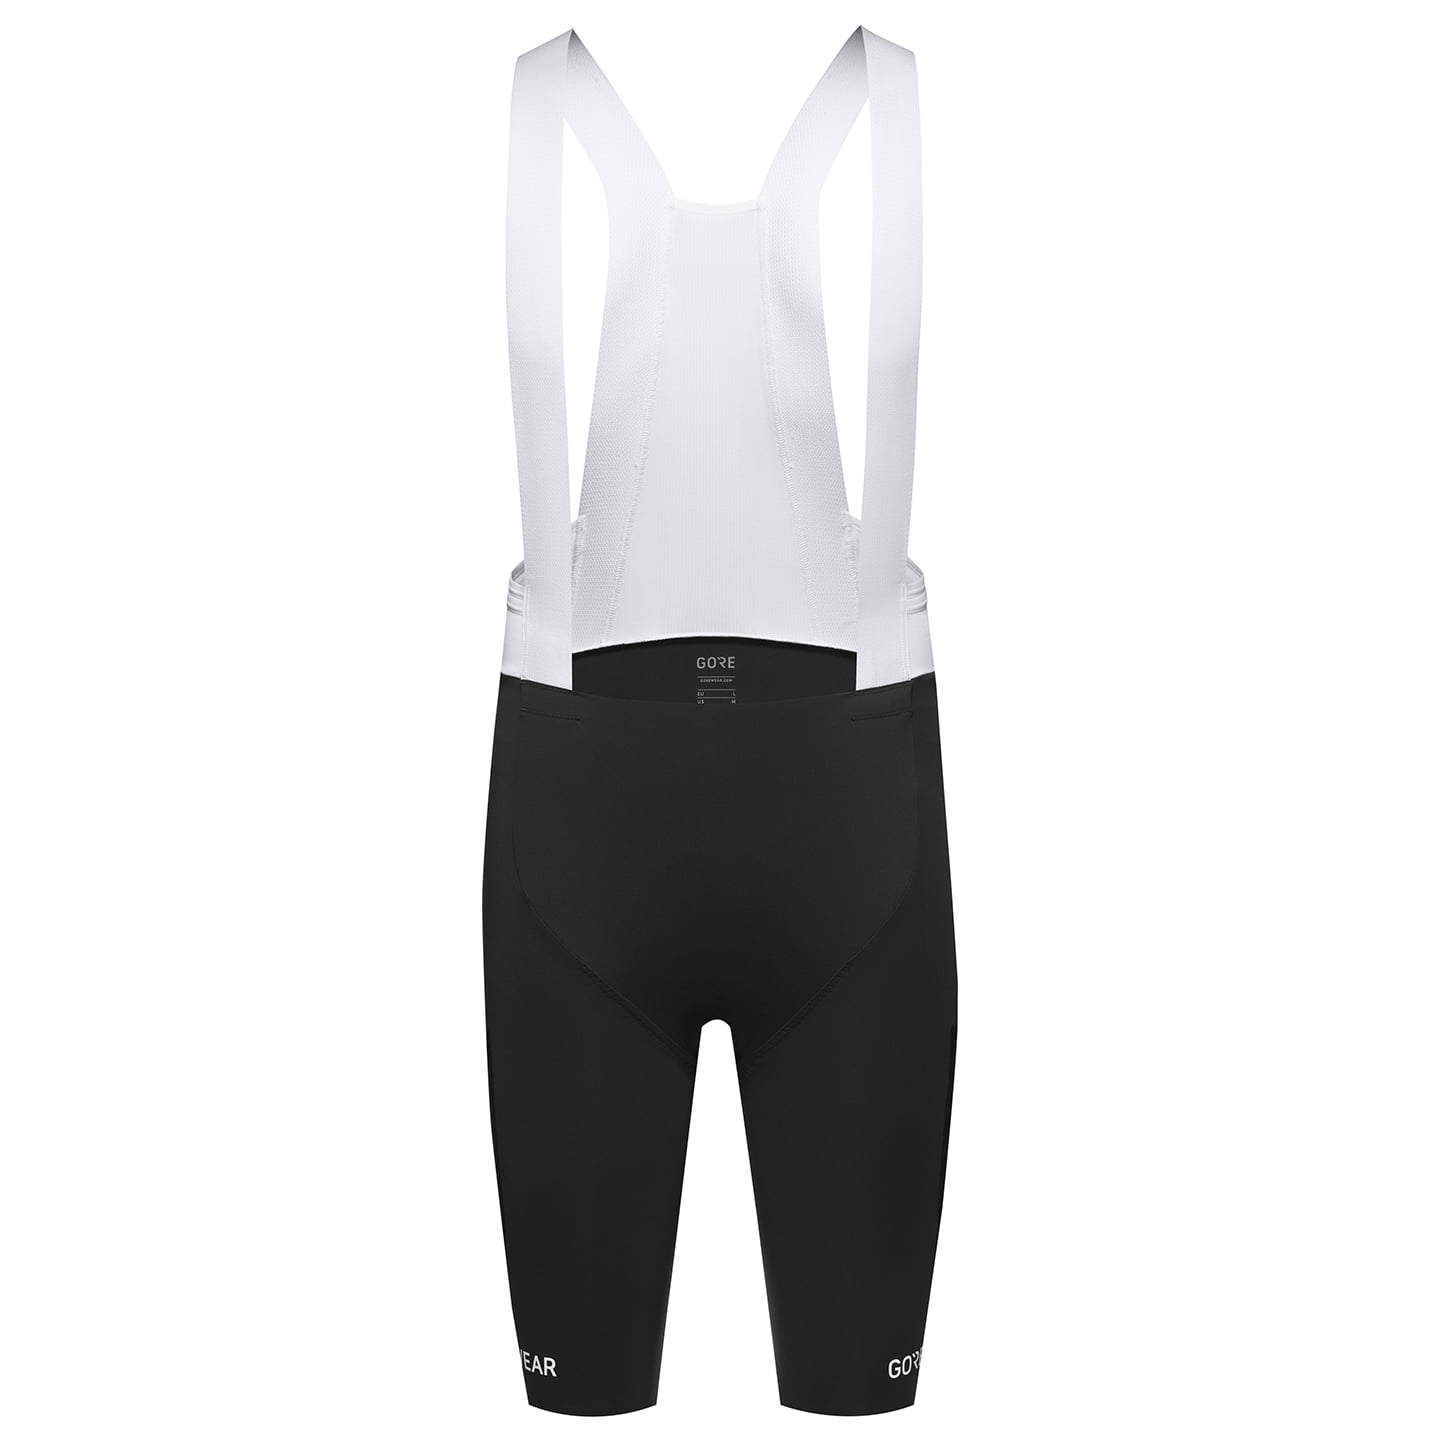 Spinshift Cargo Bib Shorts Bib Shorts, for men, size XL, Cycle shorts, Cycling clothing